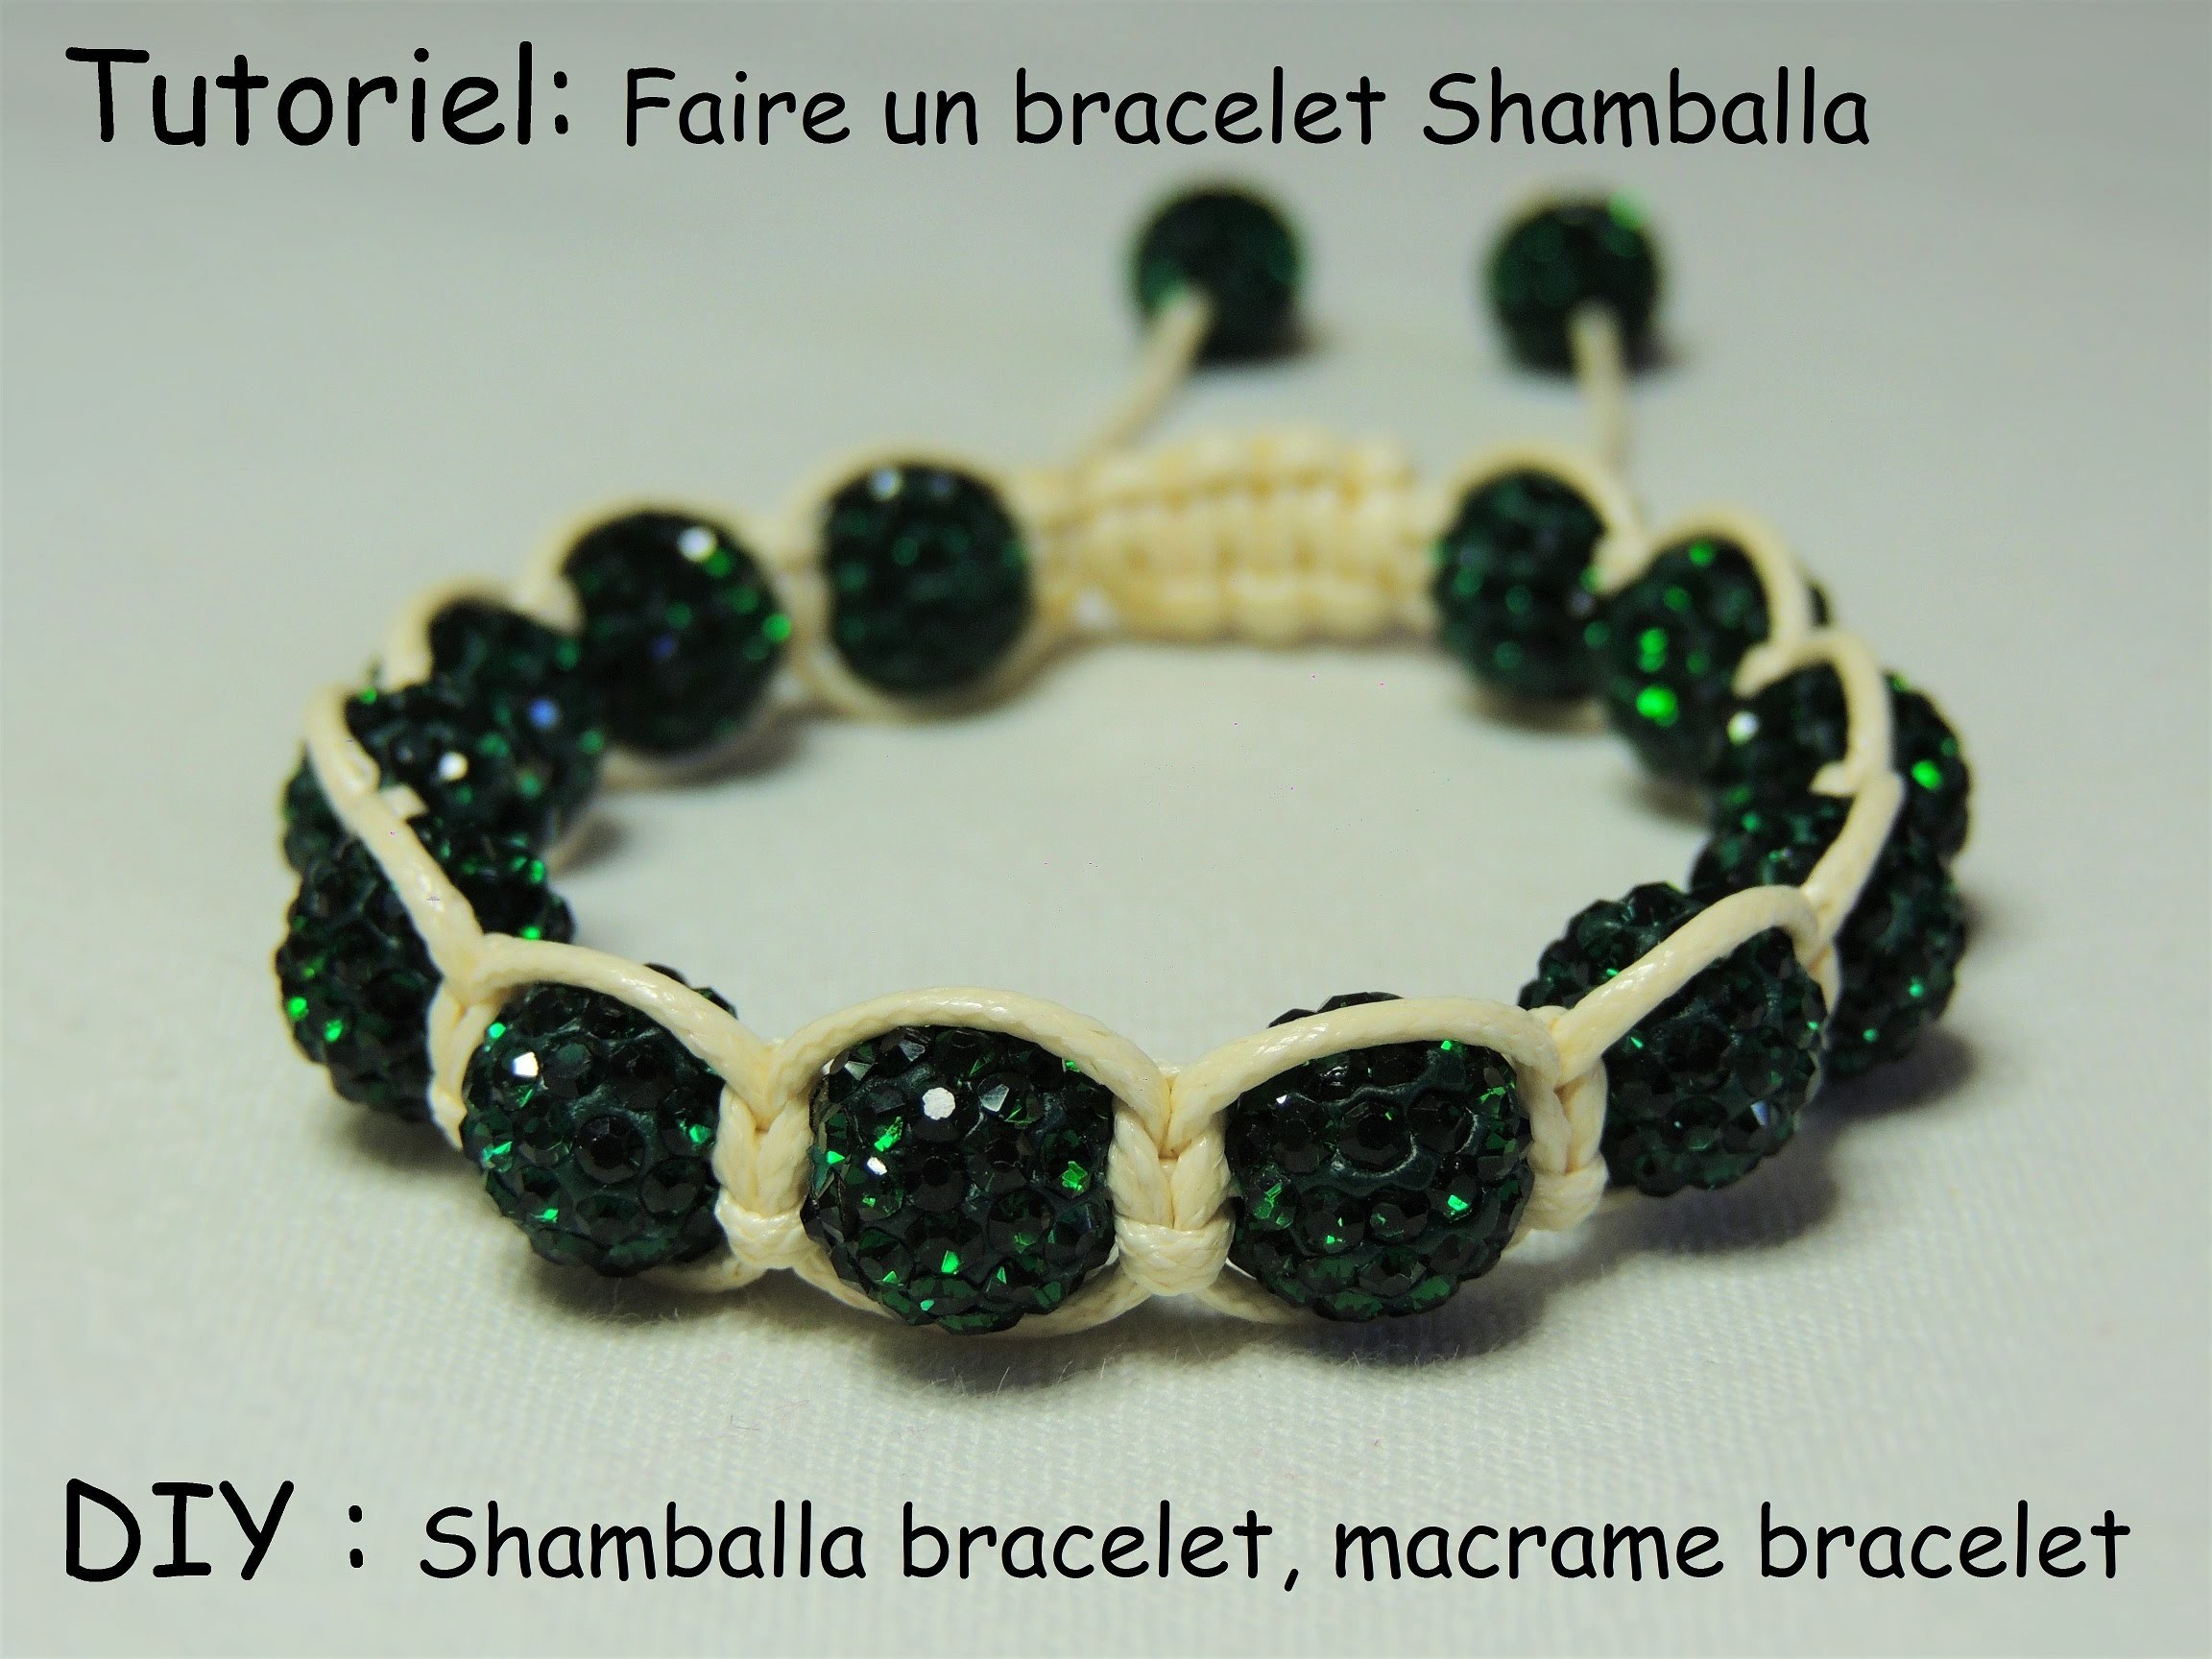 Tutoriel: faire un bracelet shamballa.  (DIY: Shamballa bracelet, macrame bracelet)